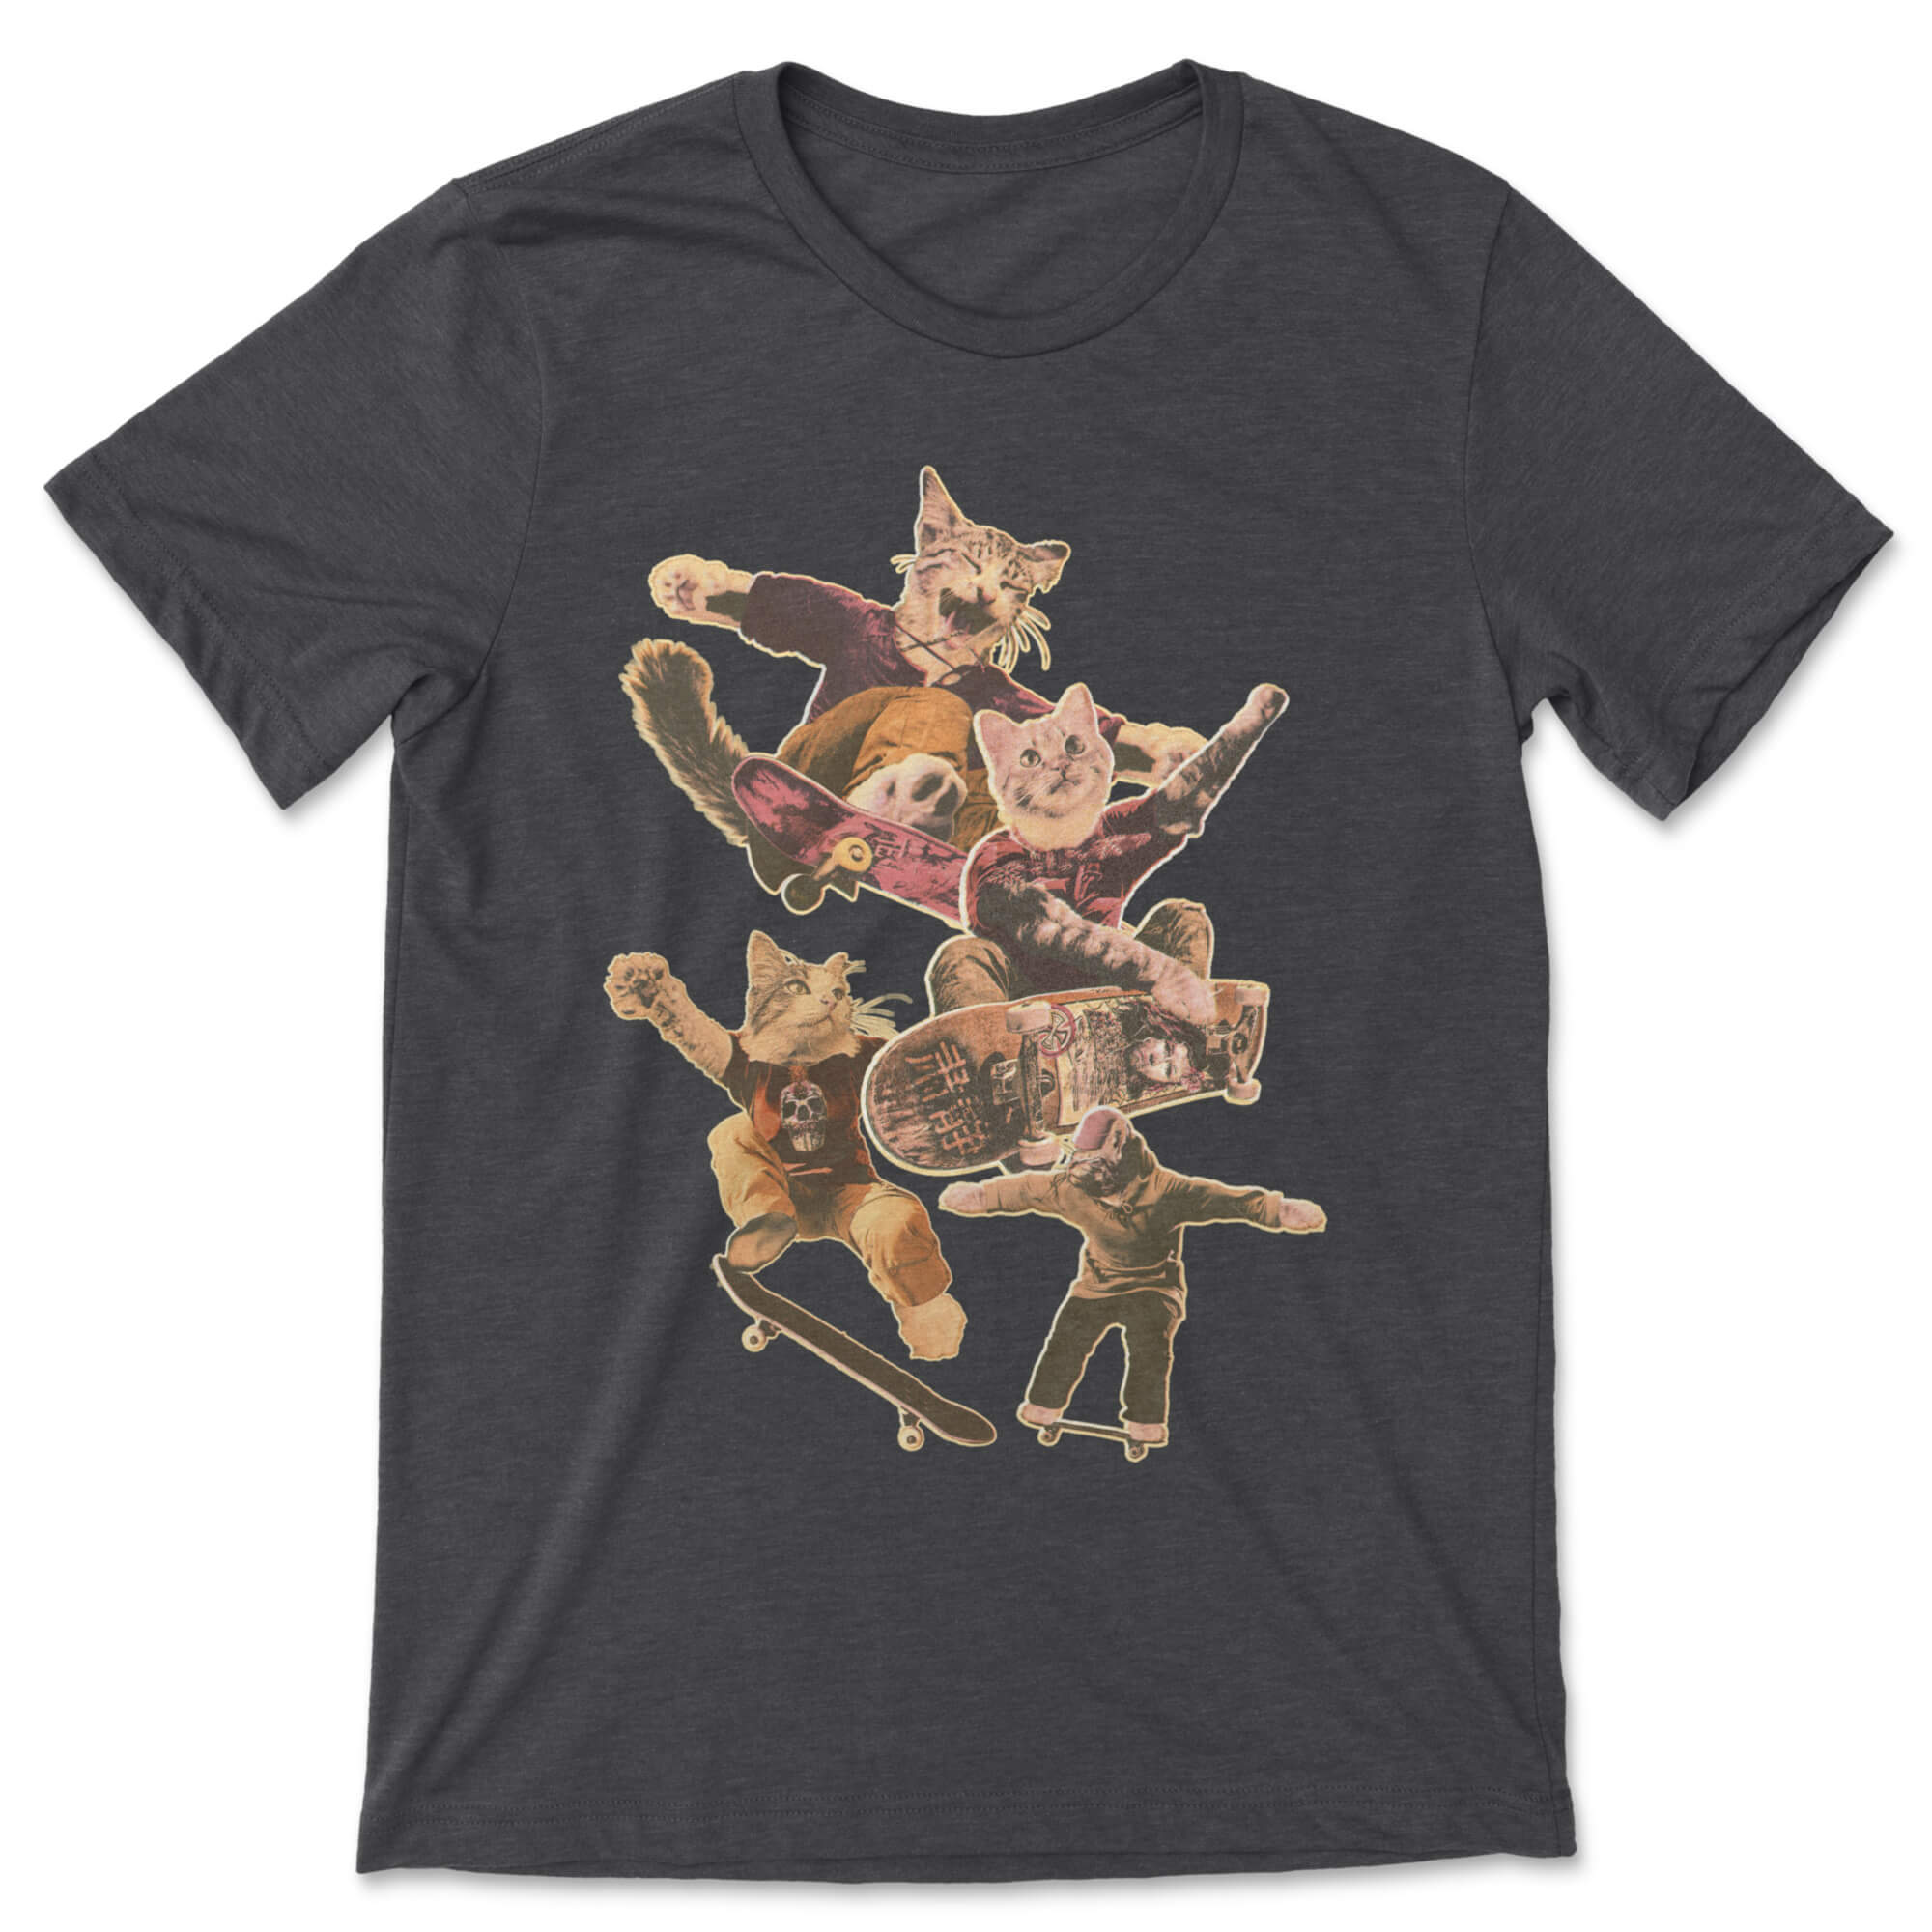 Totally Radical Skateboard Cats: The Shirt